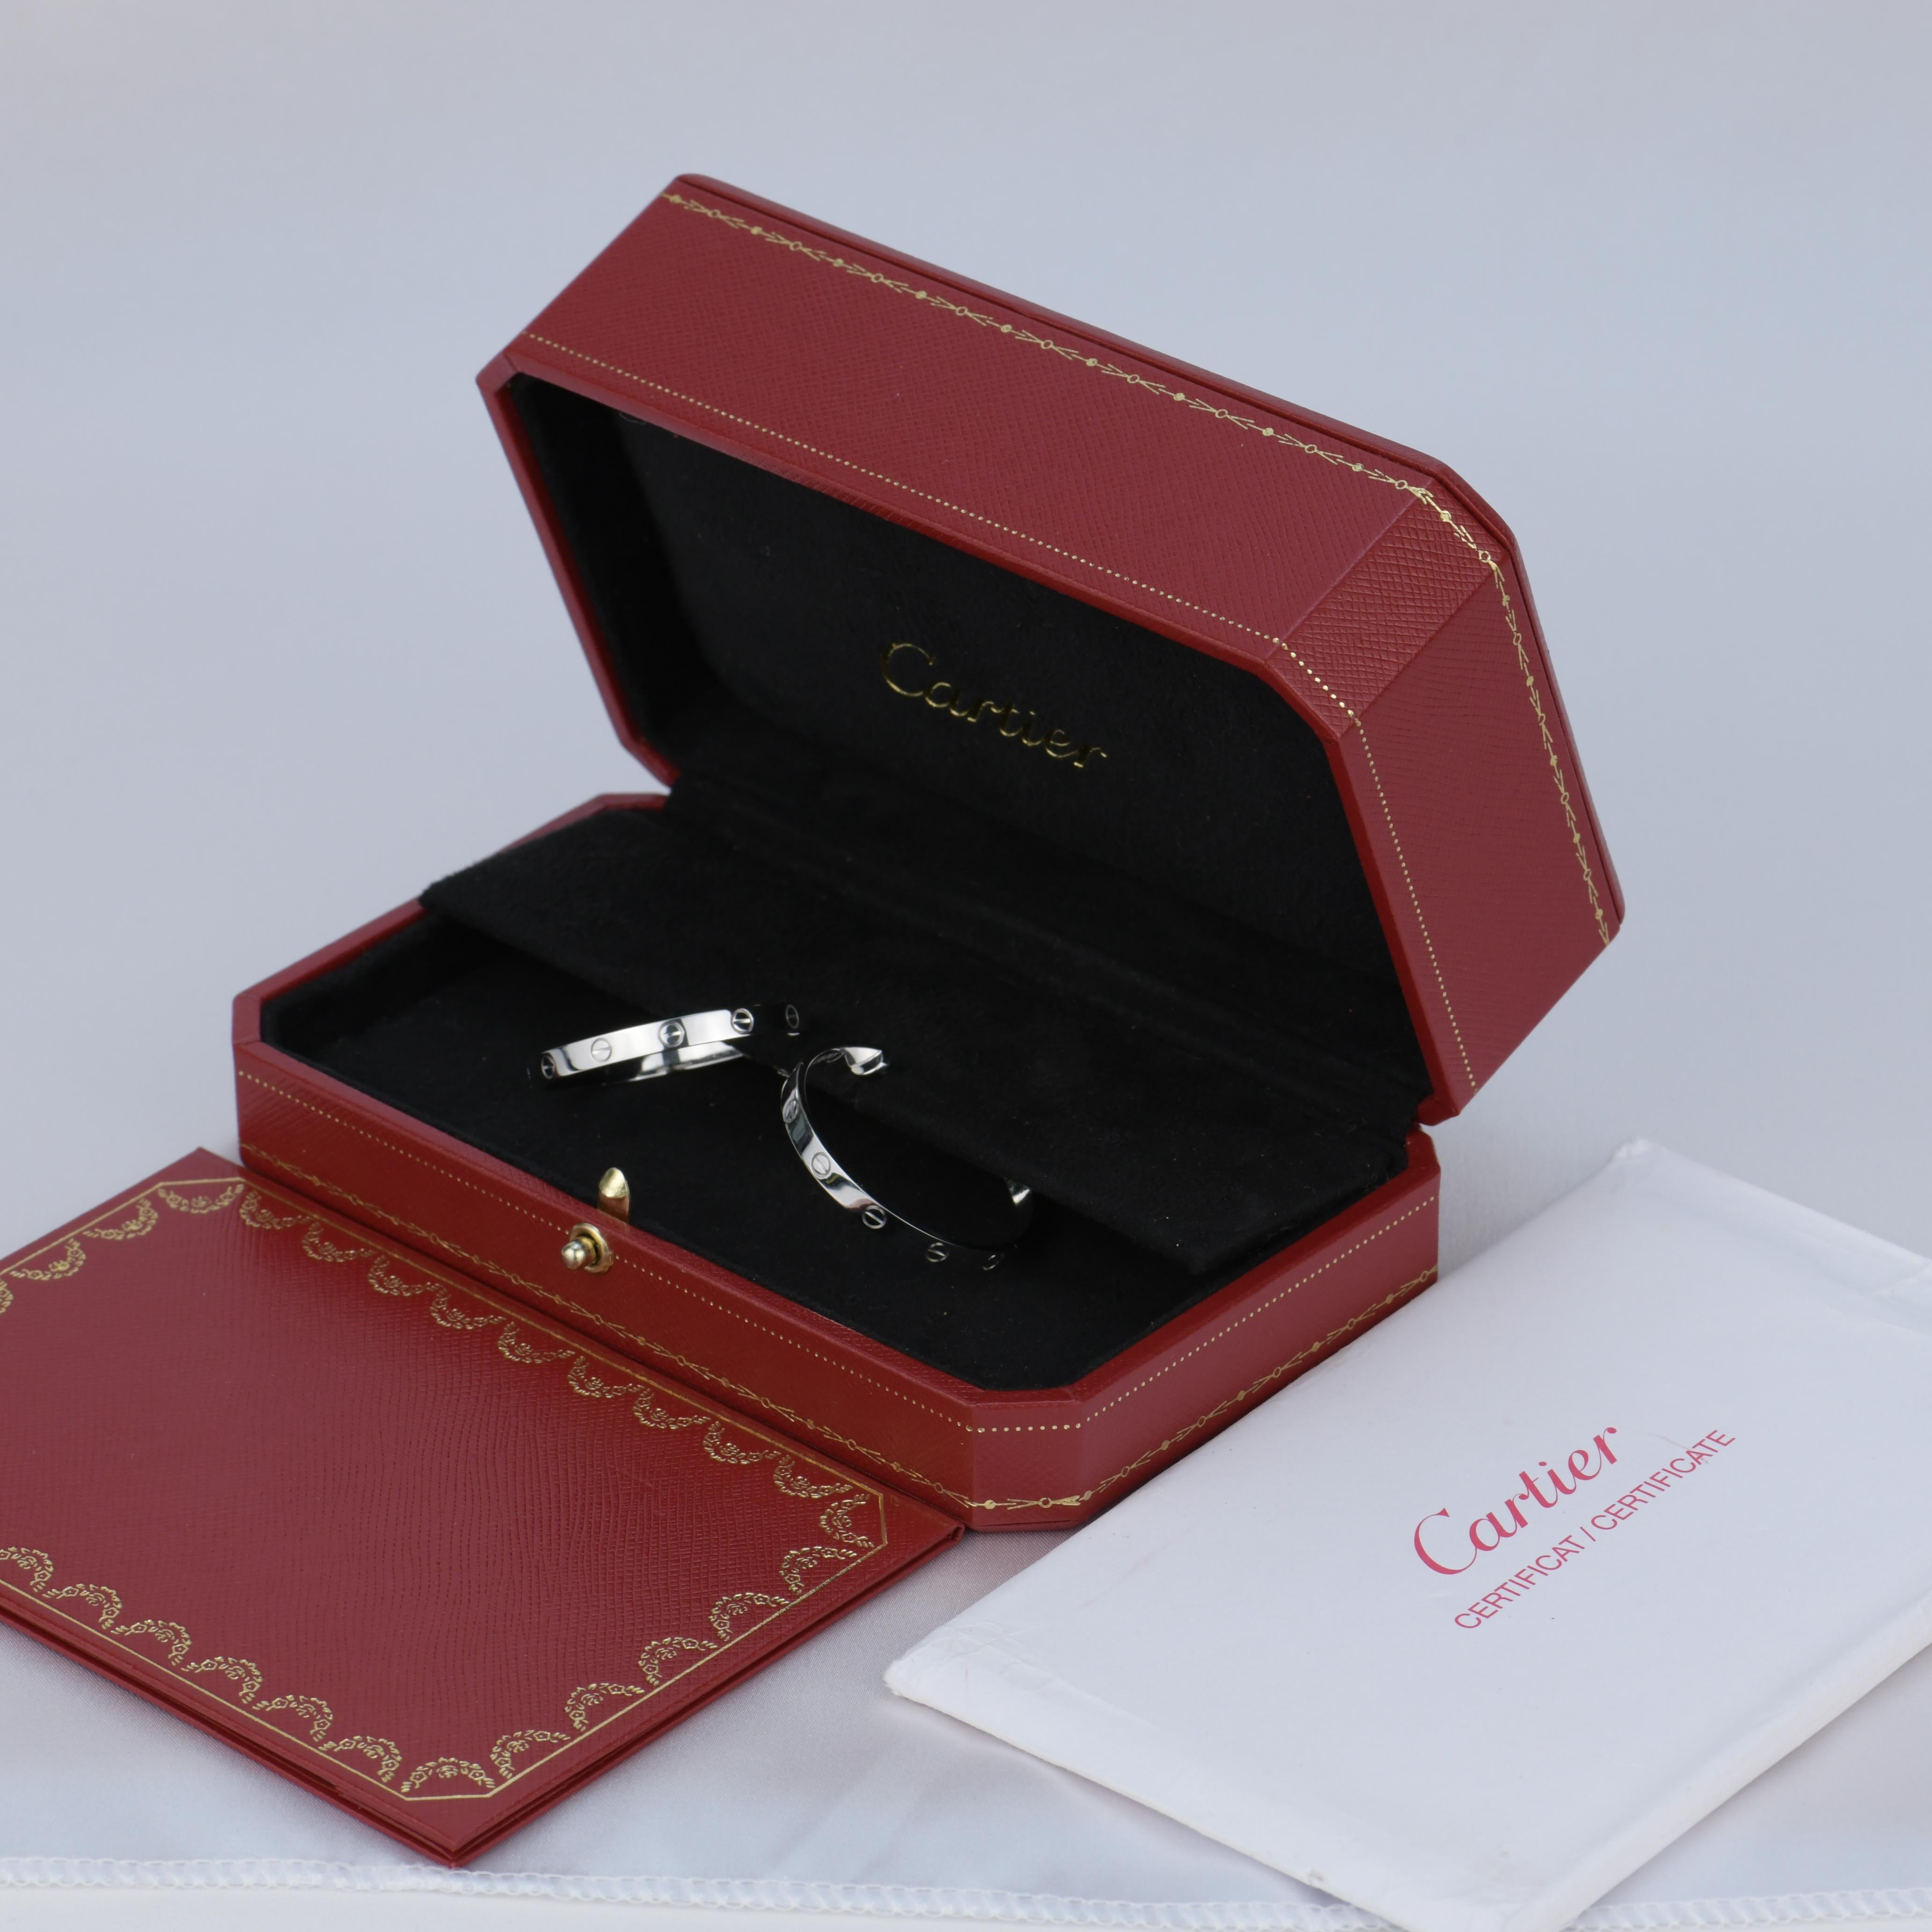 Dandelion Antiques Code	AT-0907
Brand	                                Cartier
Model	                                B8028300
Date	                                Circa 2006
Retail Price	                        £3700 / $4400 /